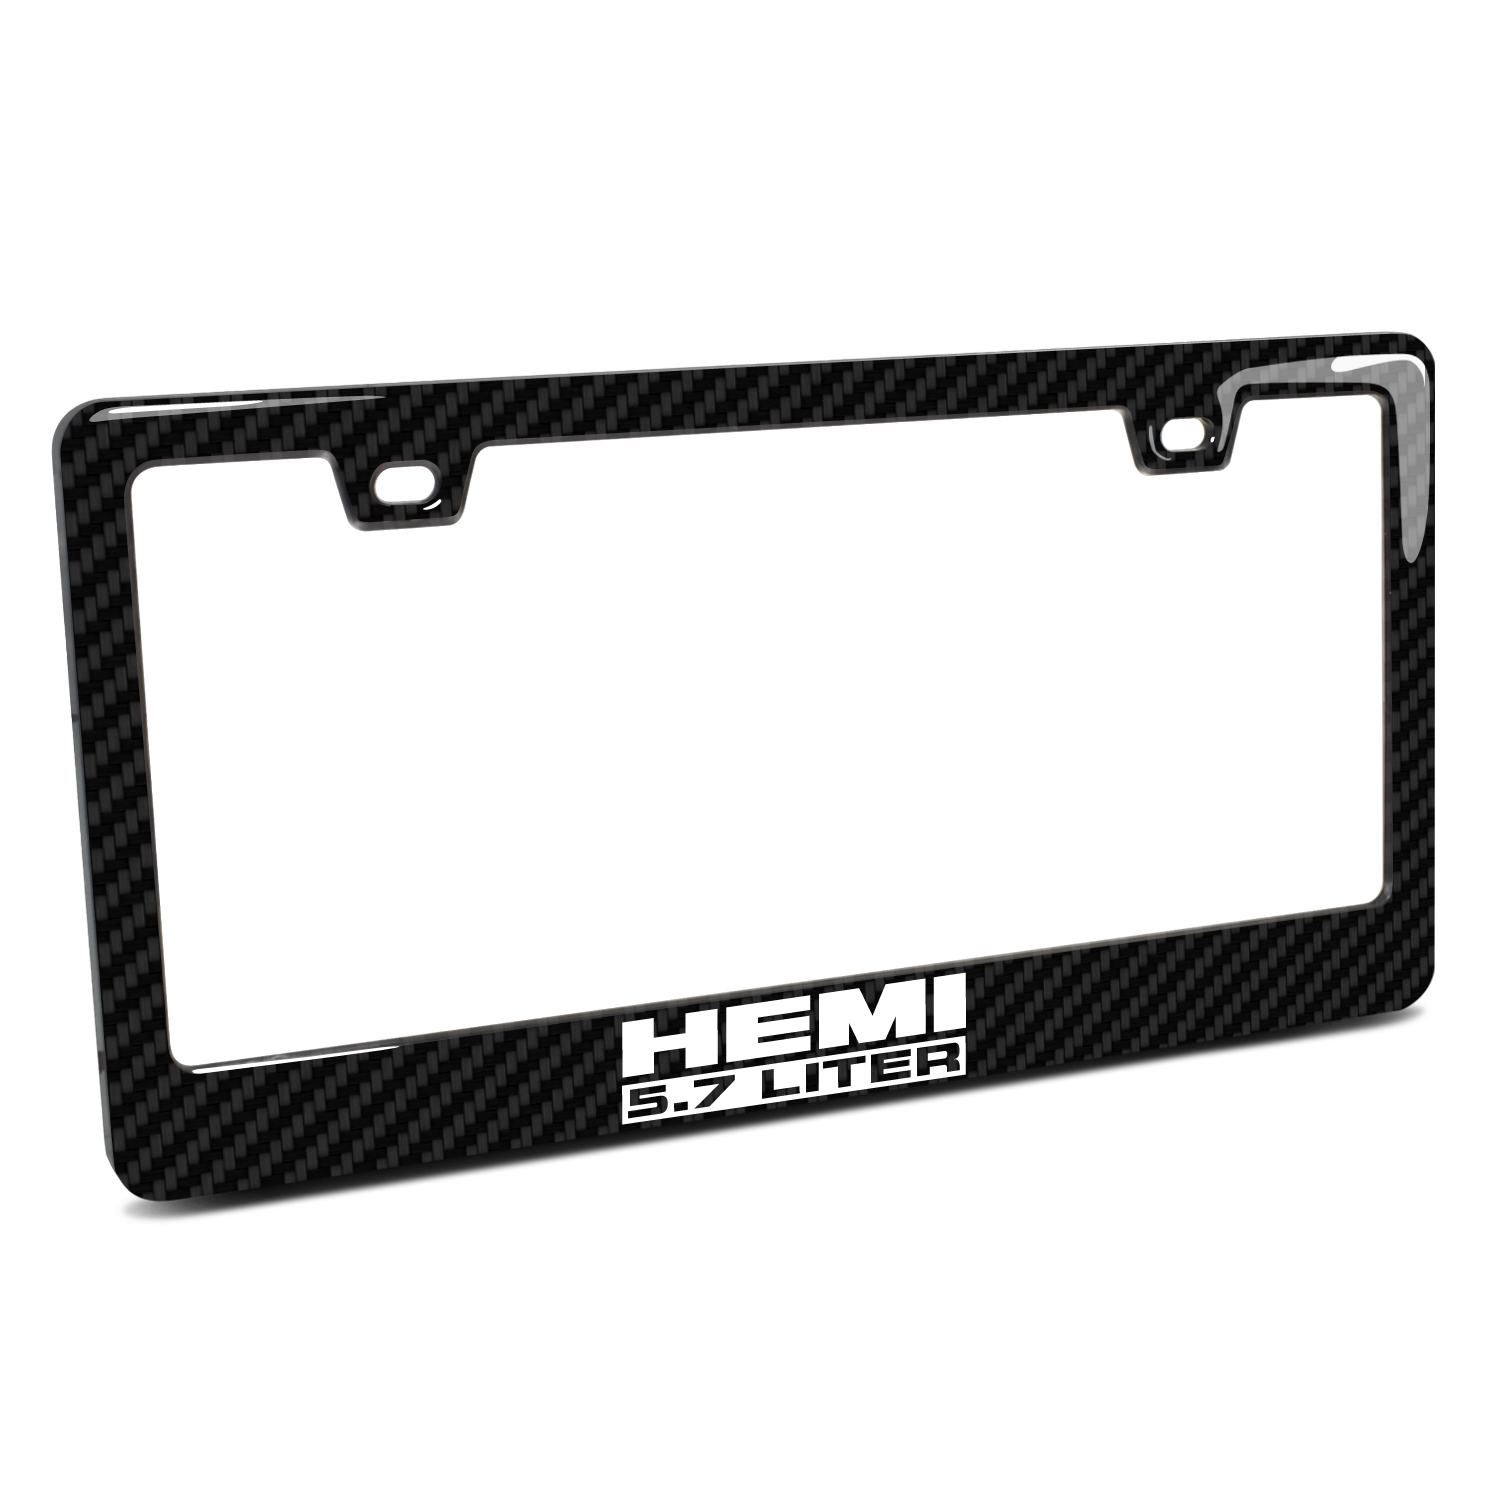 HEMI 5.7 Liter Black Real 3K Carbon Fiber Finish ABS Plastic License Plate Frame